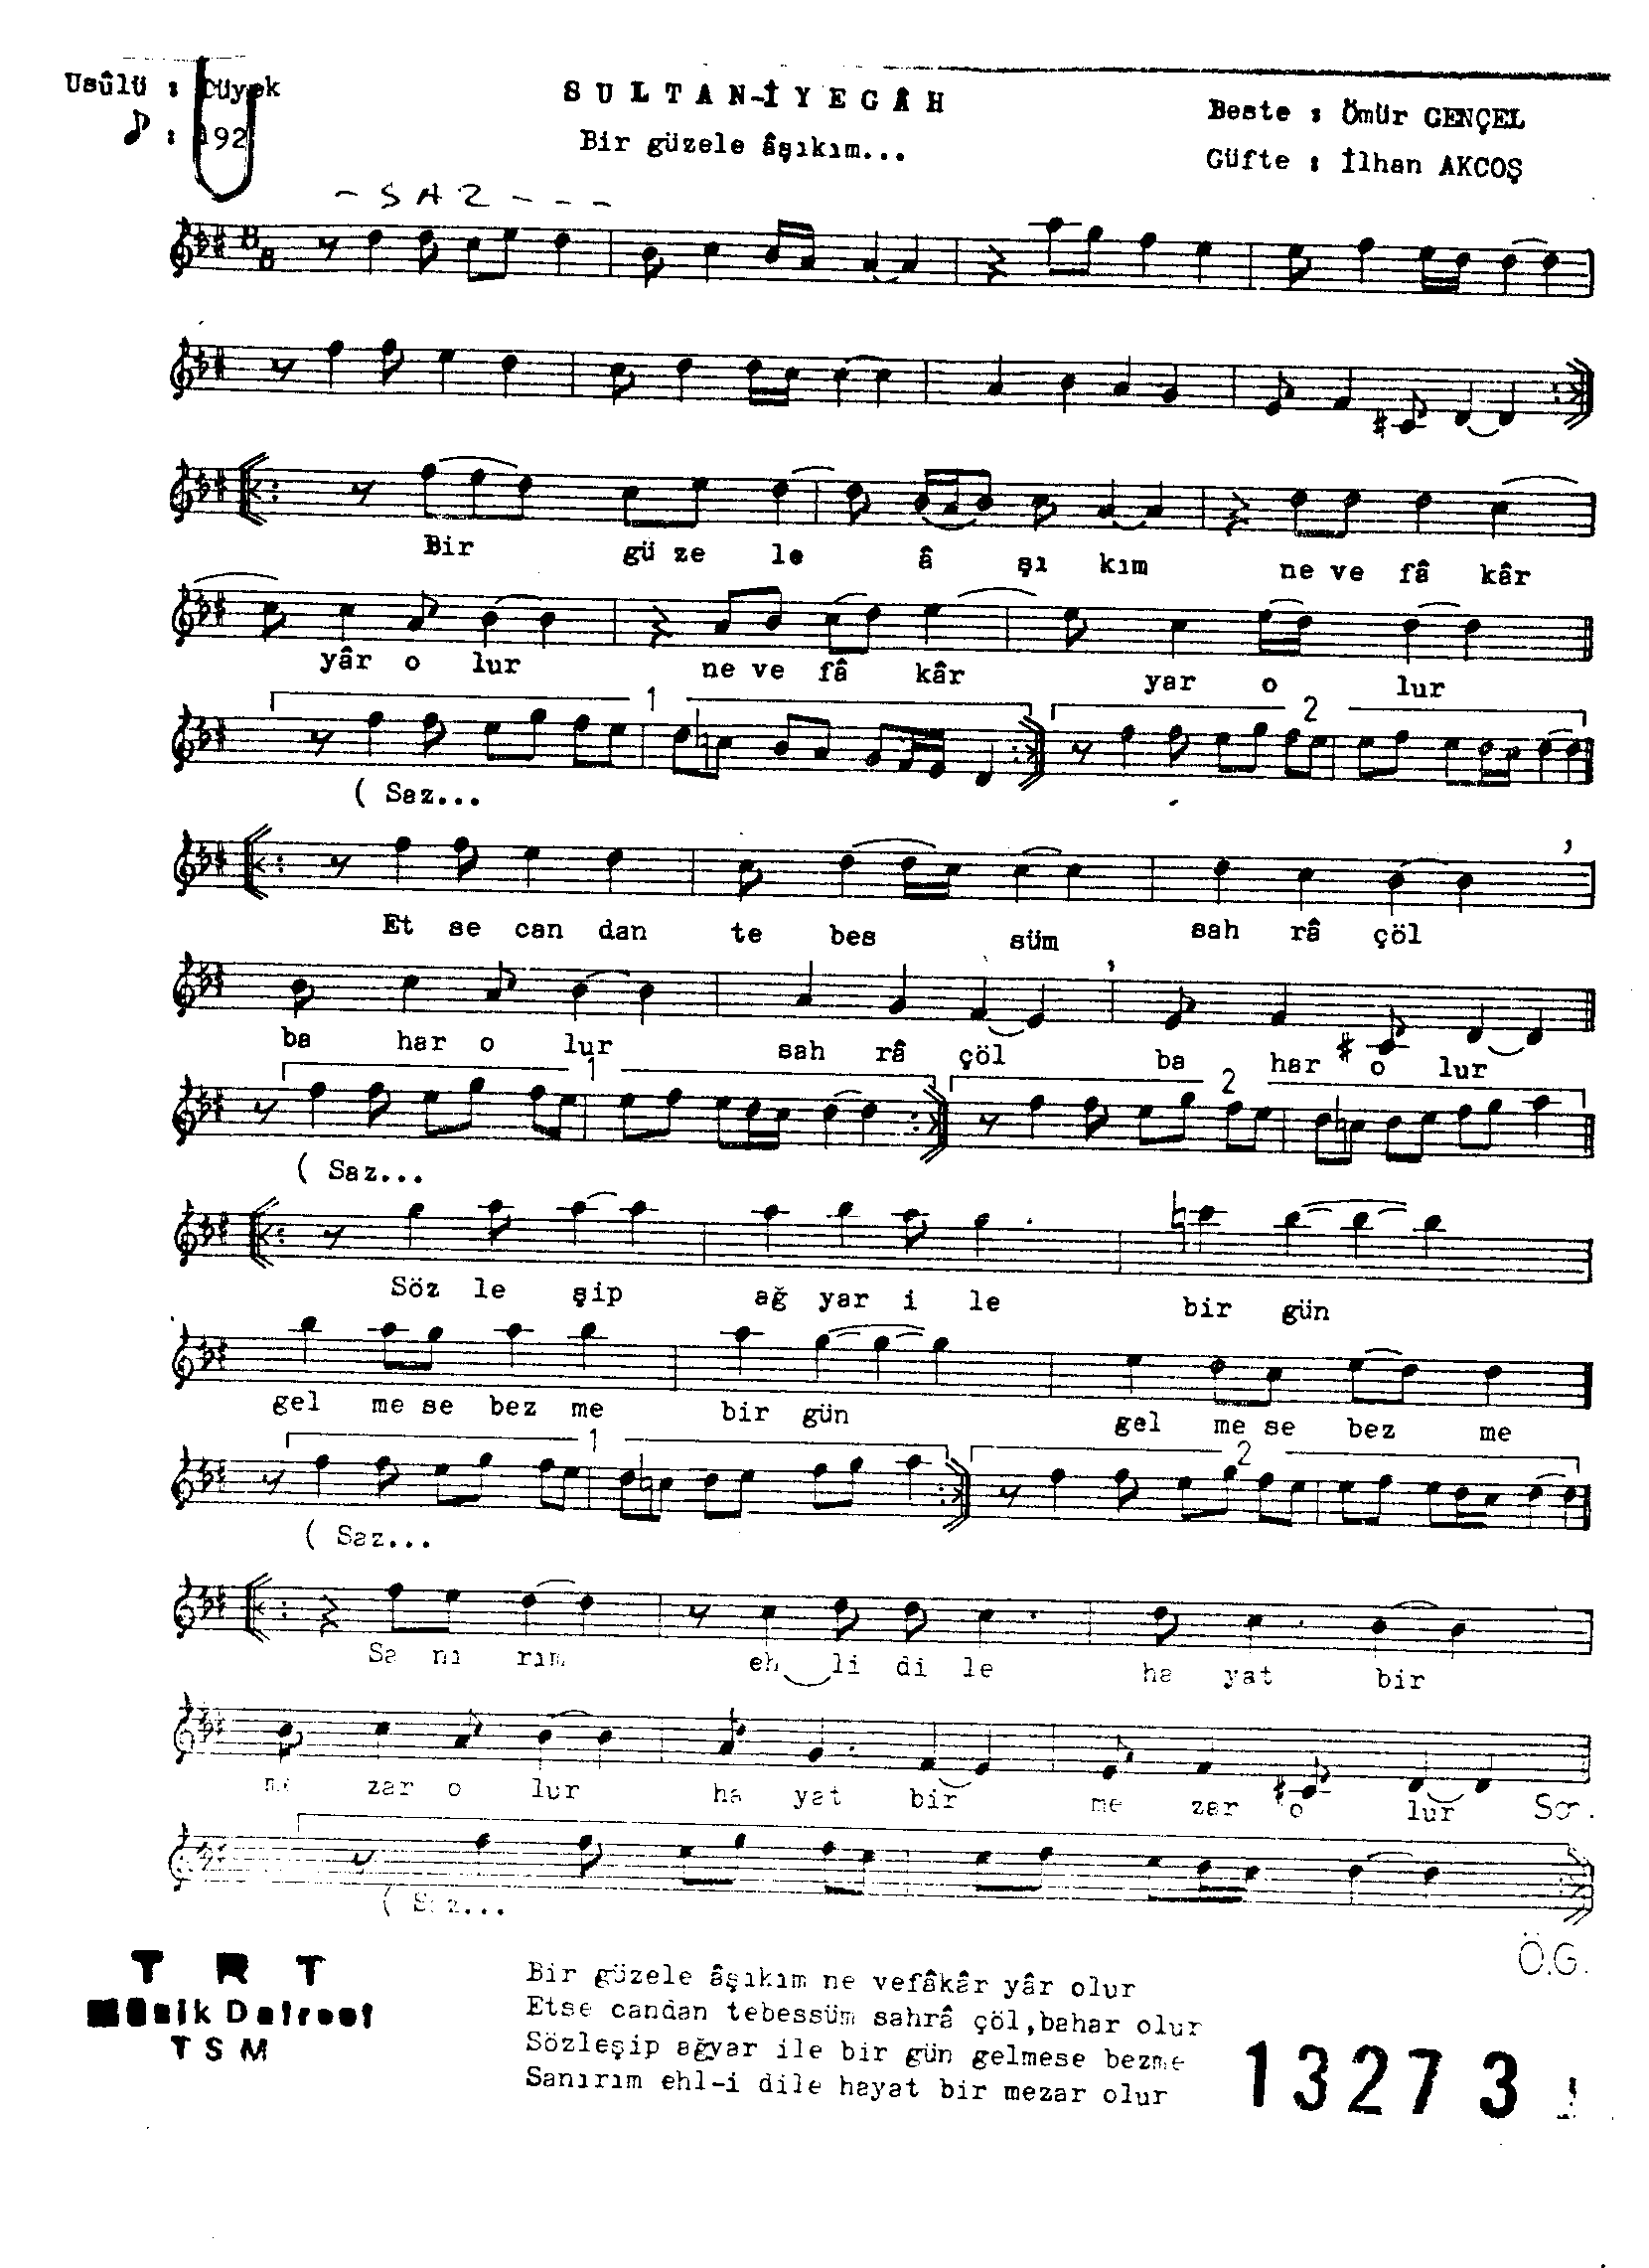 Sultânî-Yegâh - Şarkı - Ömür Gençel - Sayfa 1